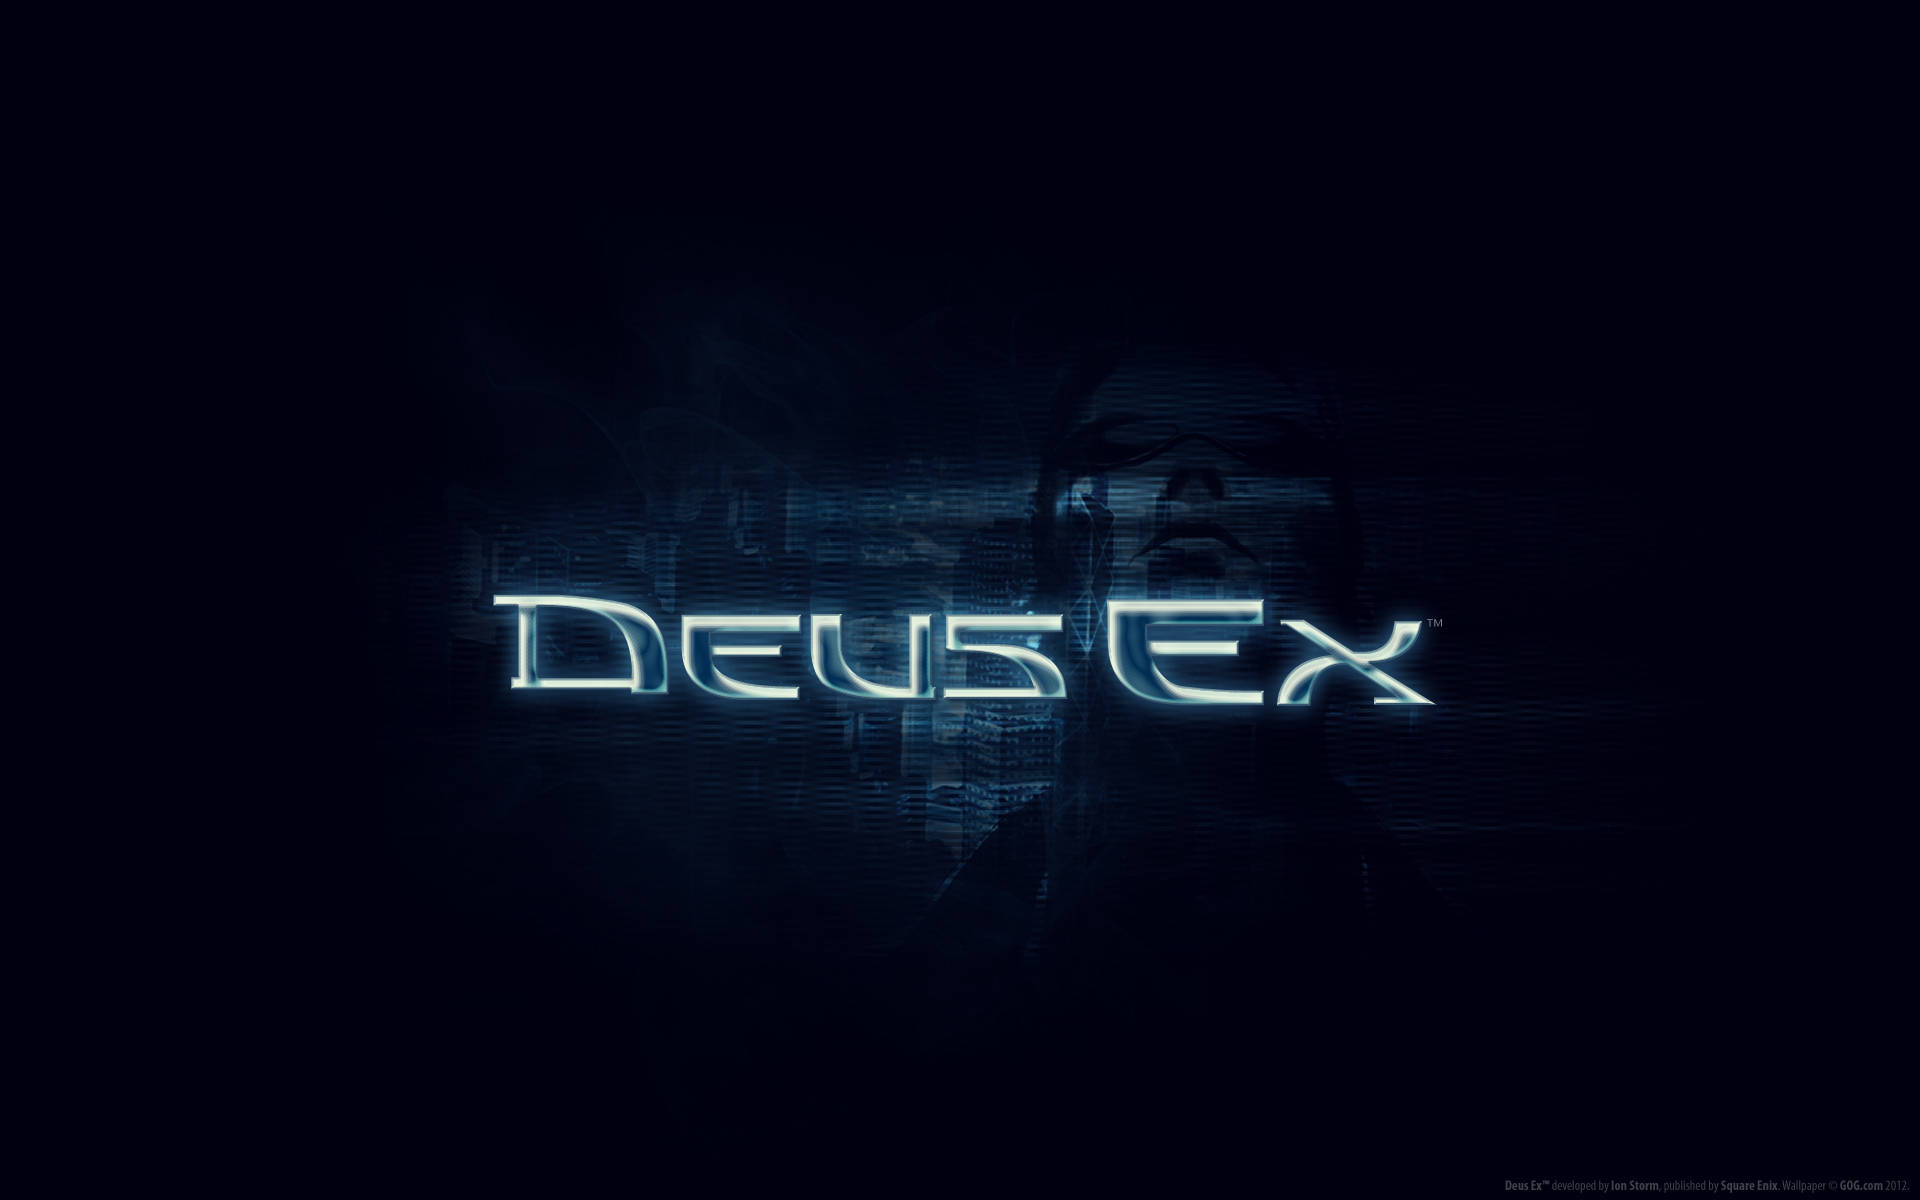 Cool Deus Ex Text Background